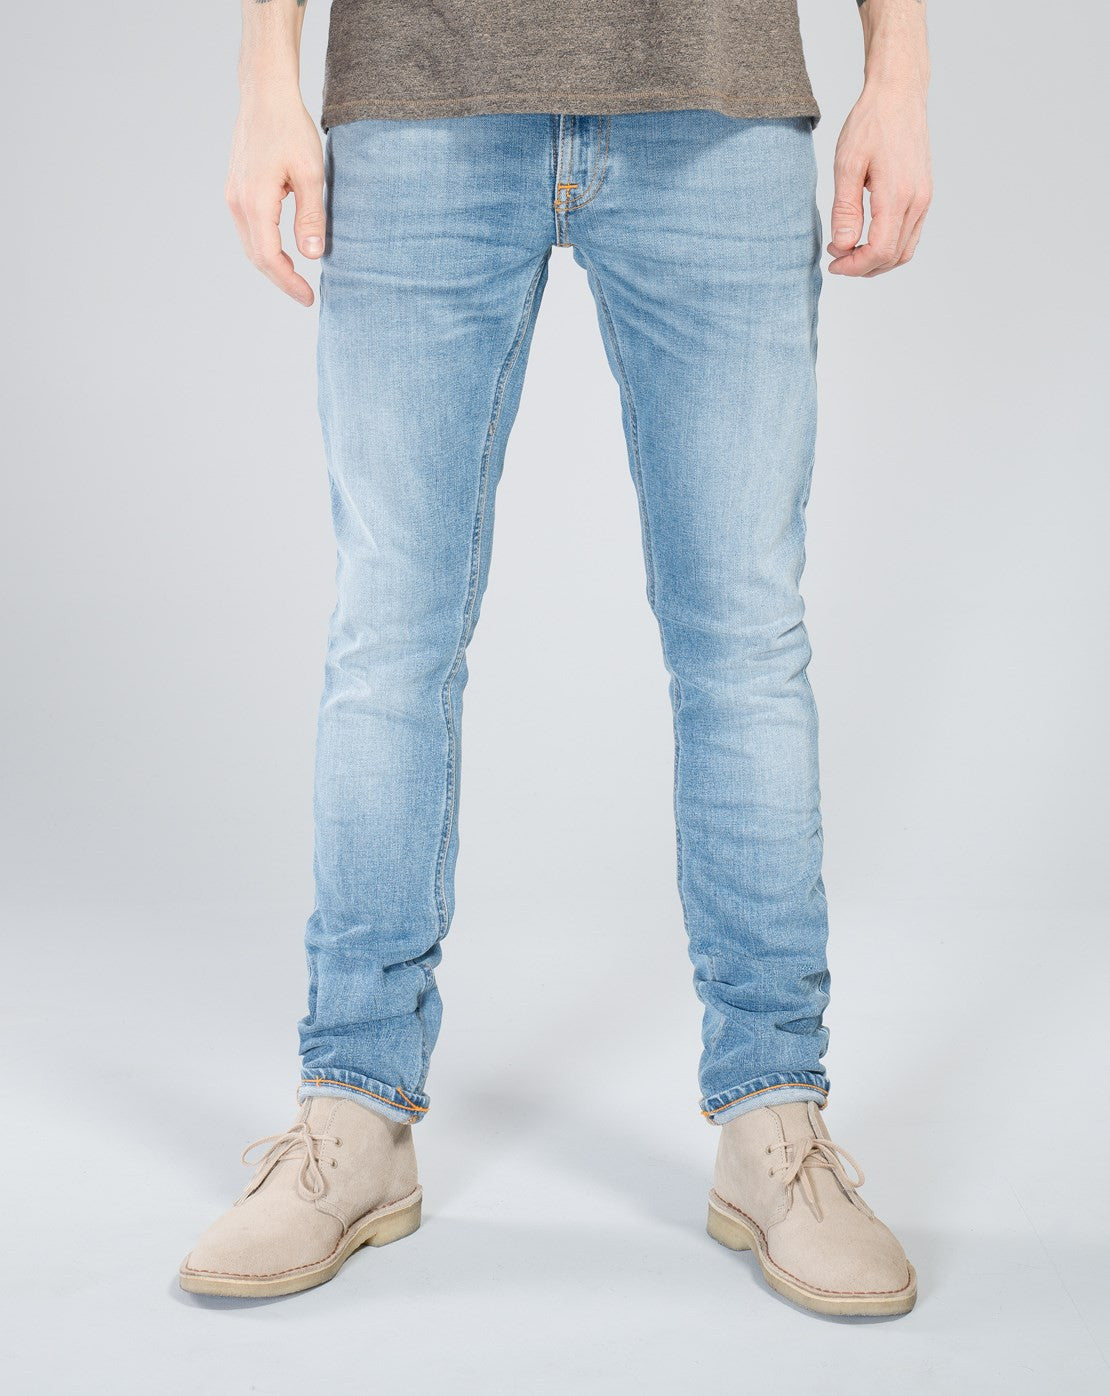 Nudie Jeans Tight Long John Saltwater Indigo - Mildblend Supply Co